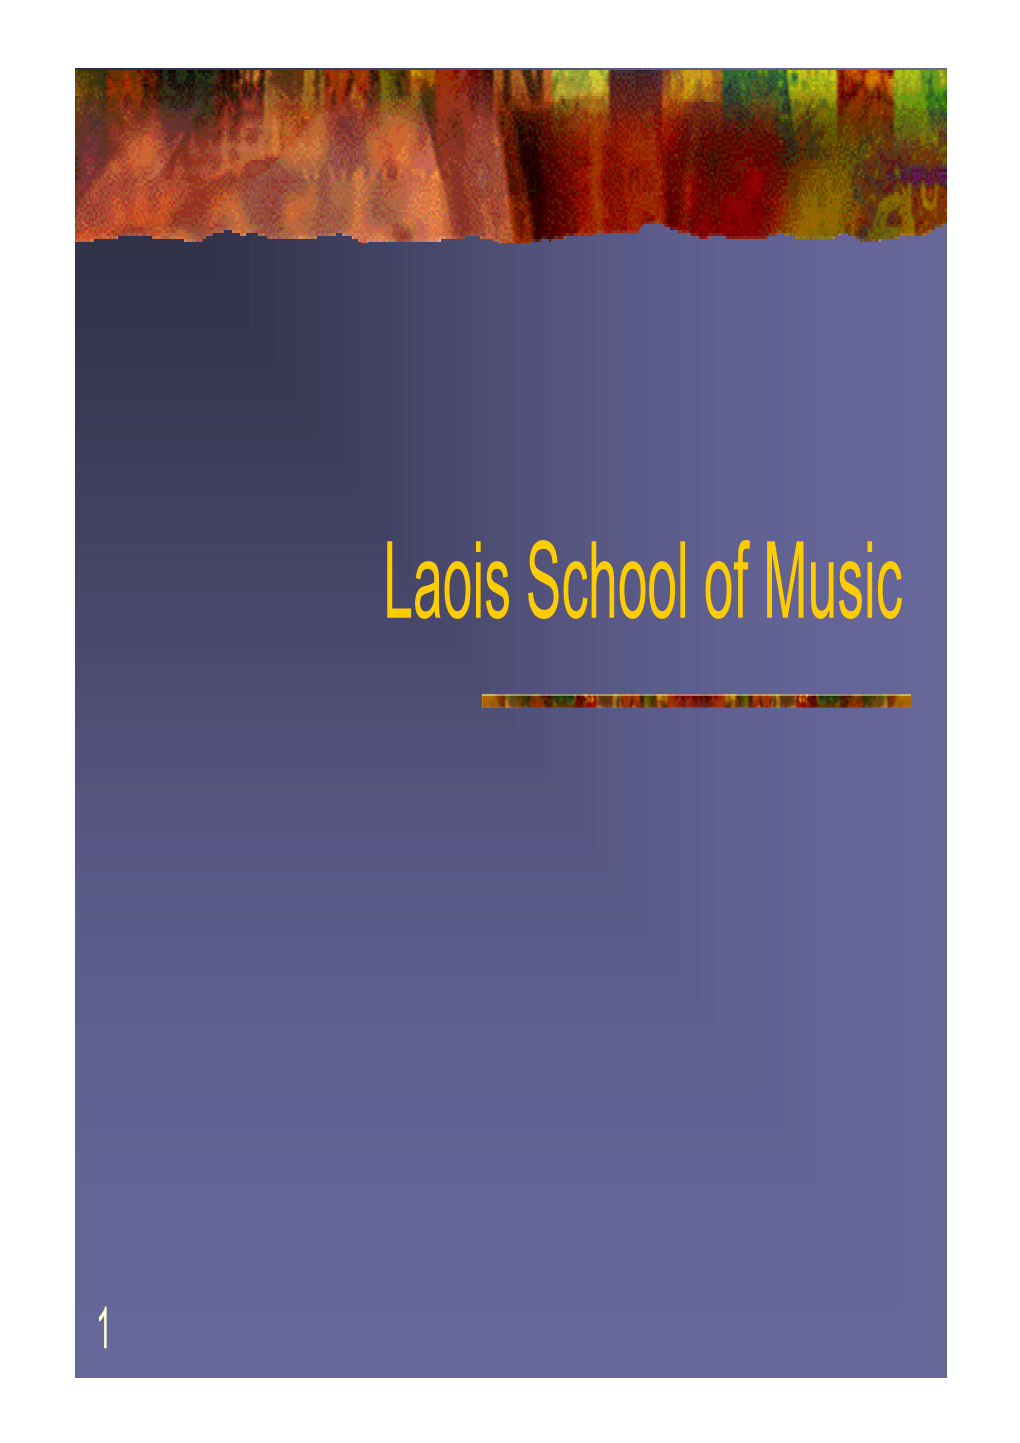 Laois School of Music Presentation